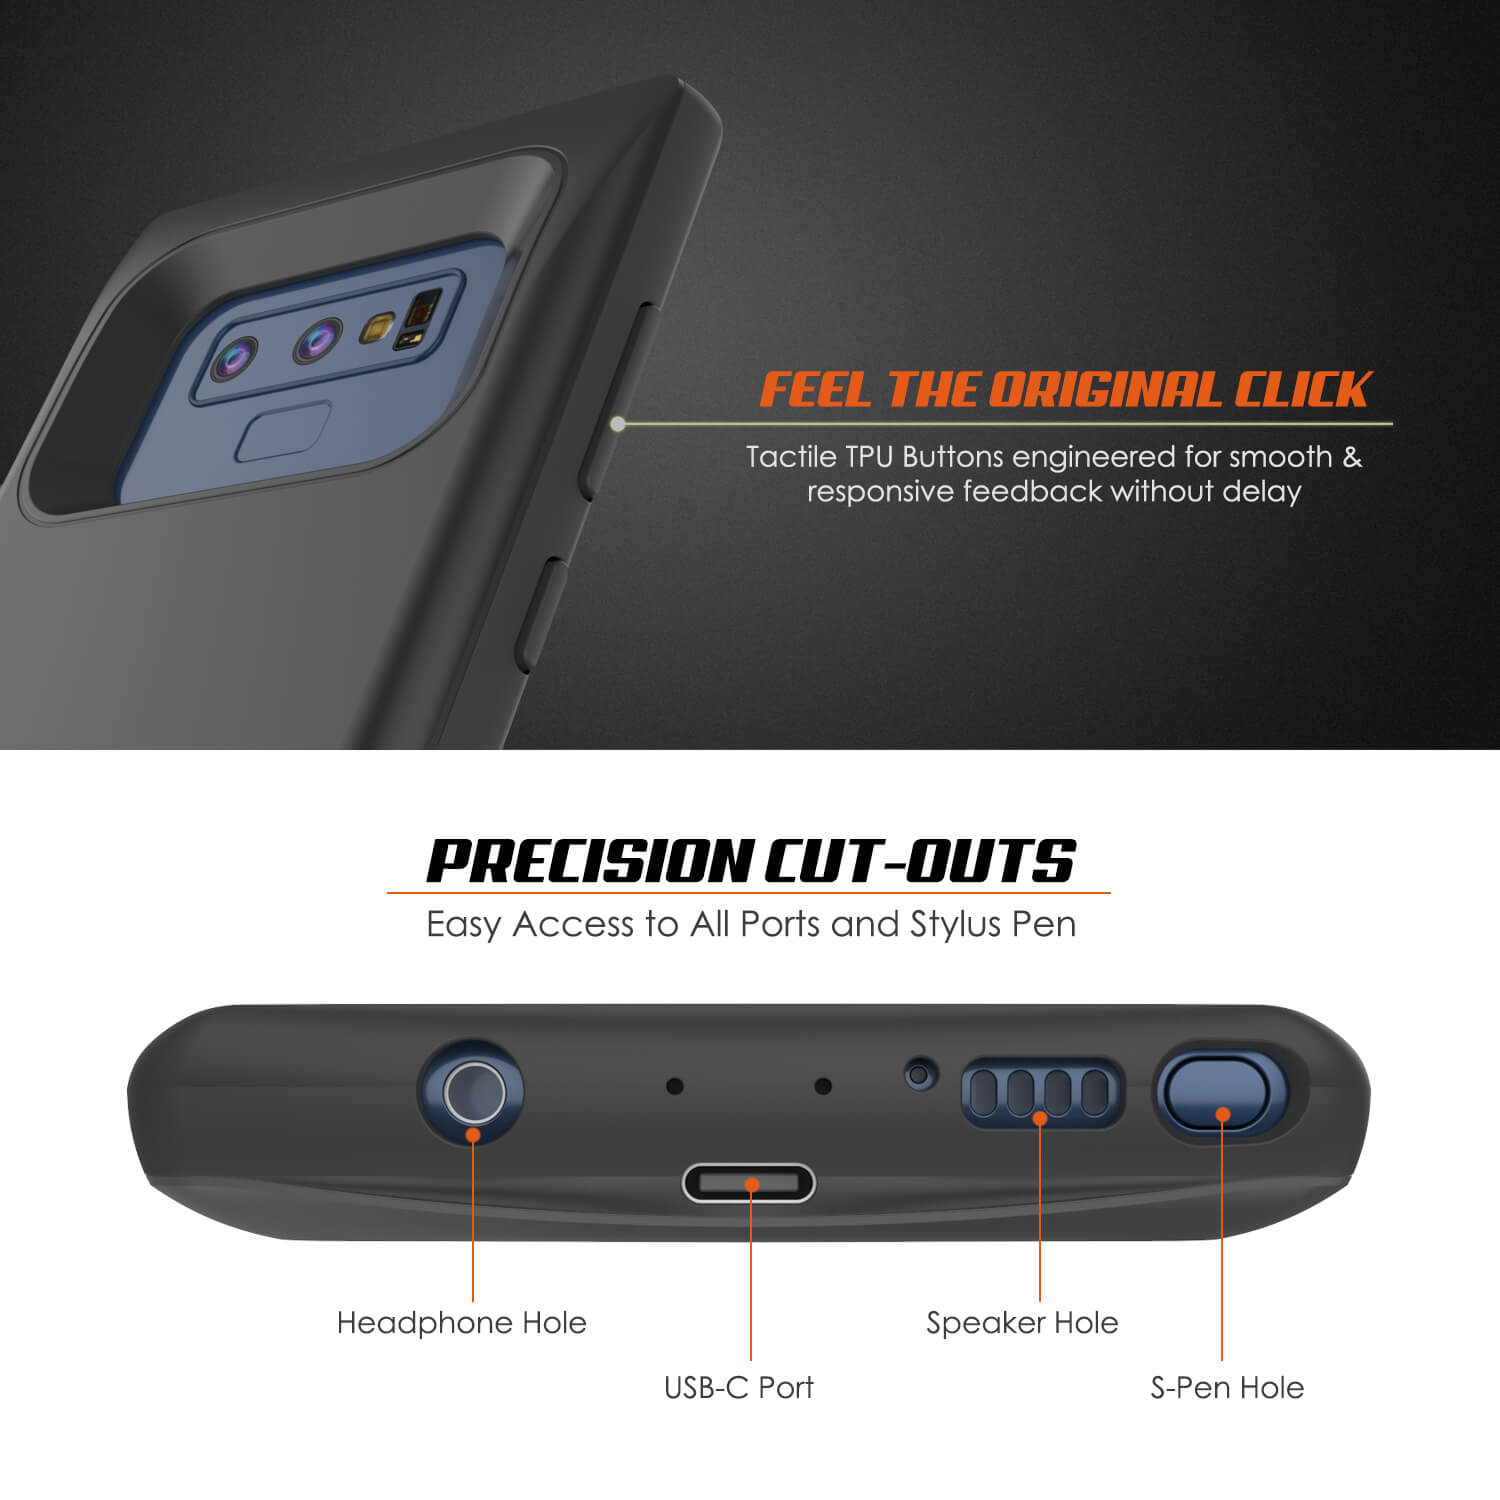 Galaxy Note 9 5000mAH Battery Charger W/ USB Port Slim Case [Black] - PunkCase NZ